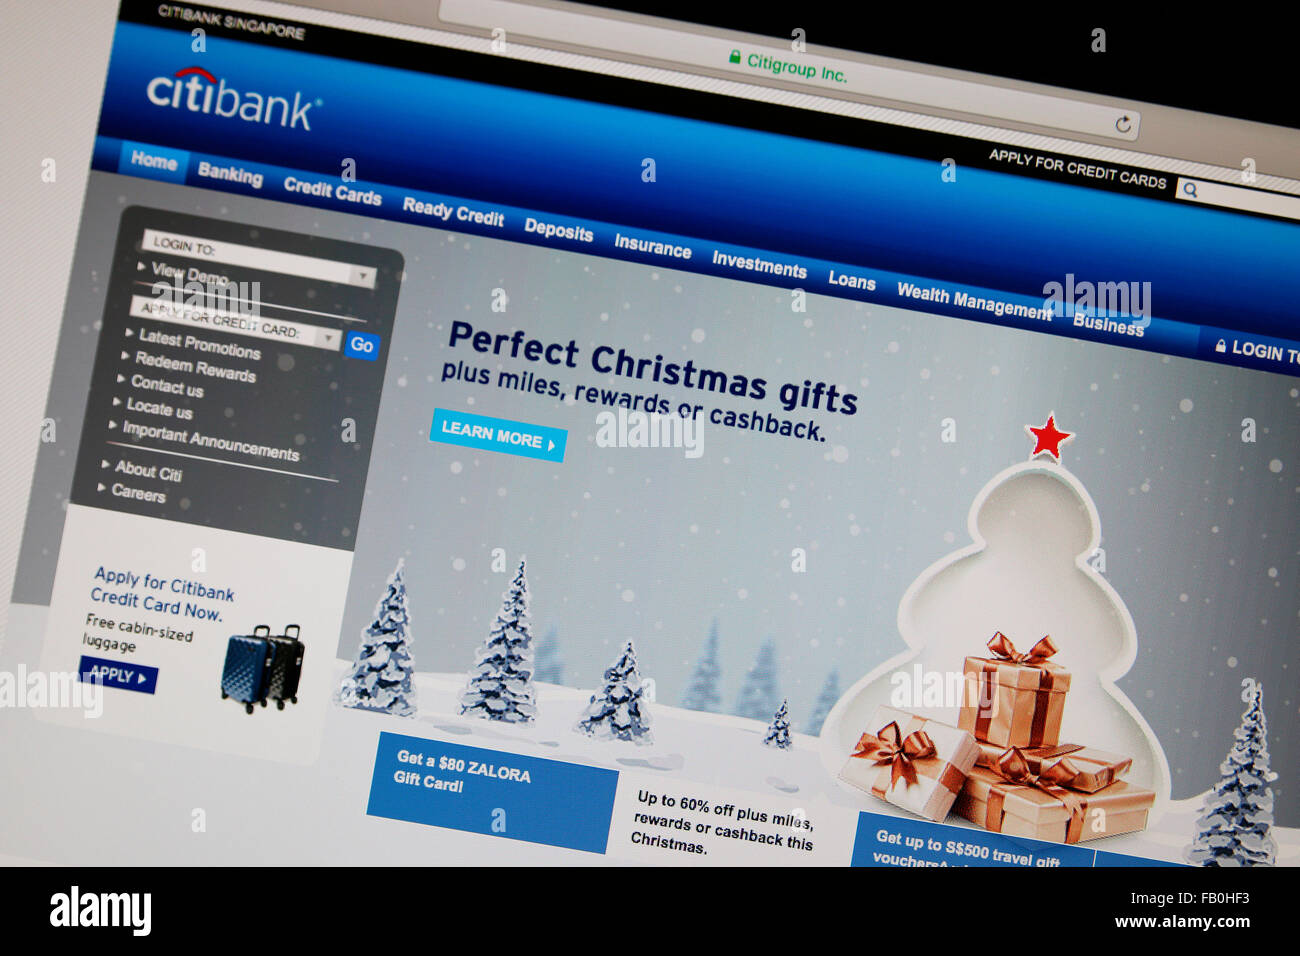 Citibank online website and banking platform Stock Photo